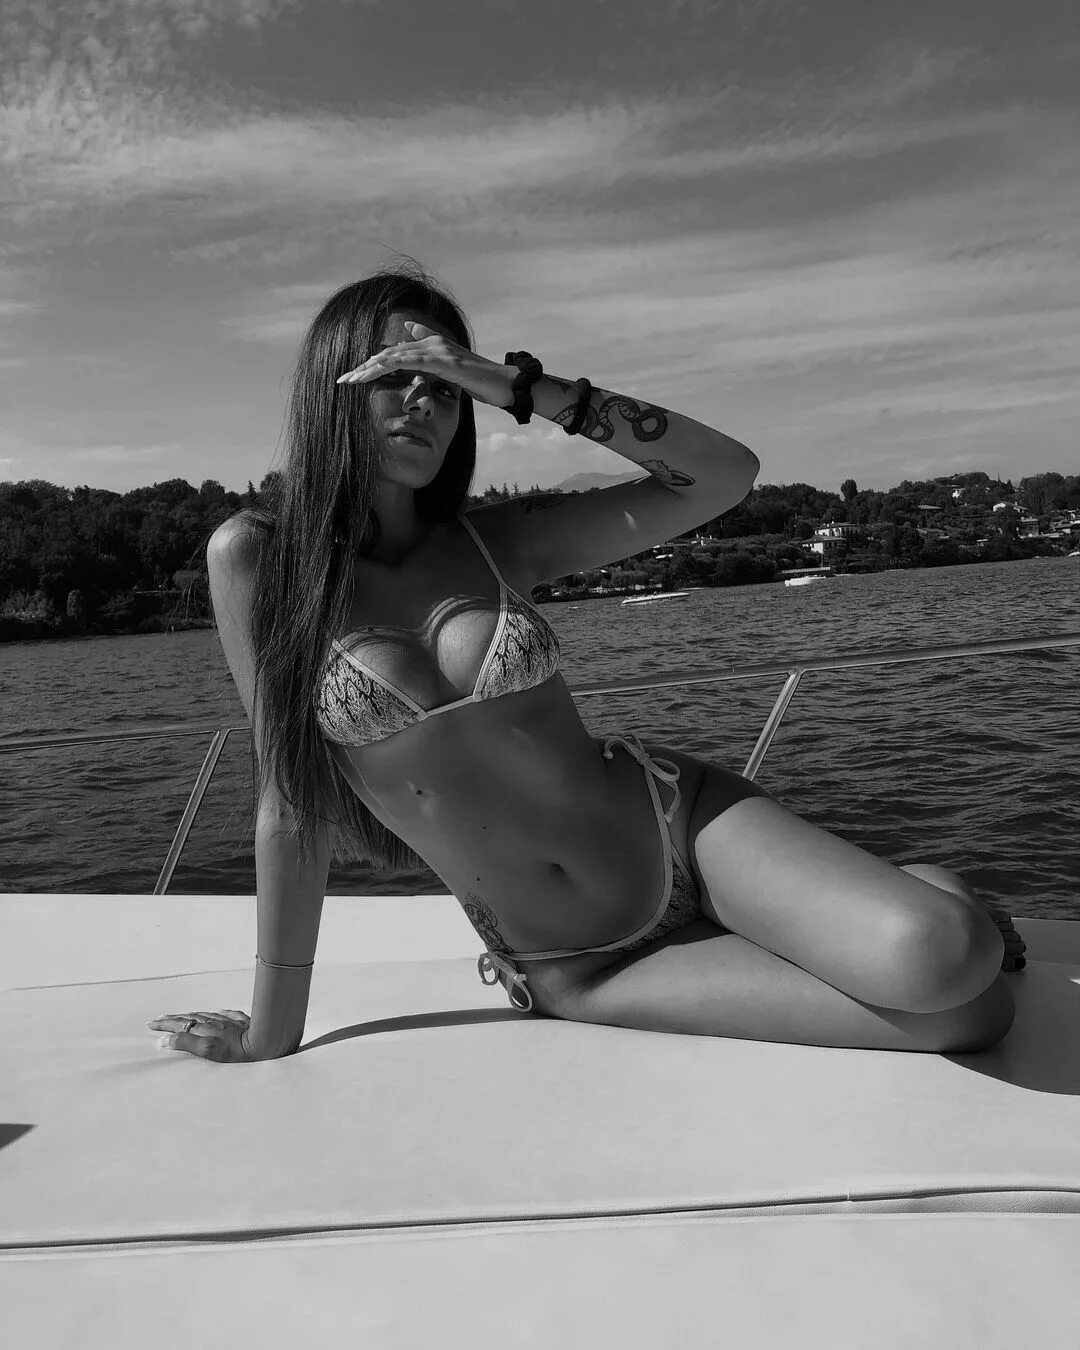 Instagram'da Camilla: "That crazy little sun on board 🌞 🔙 